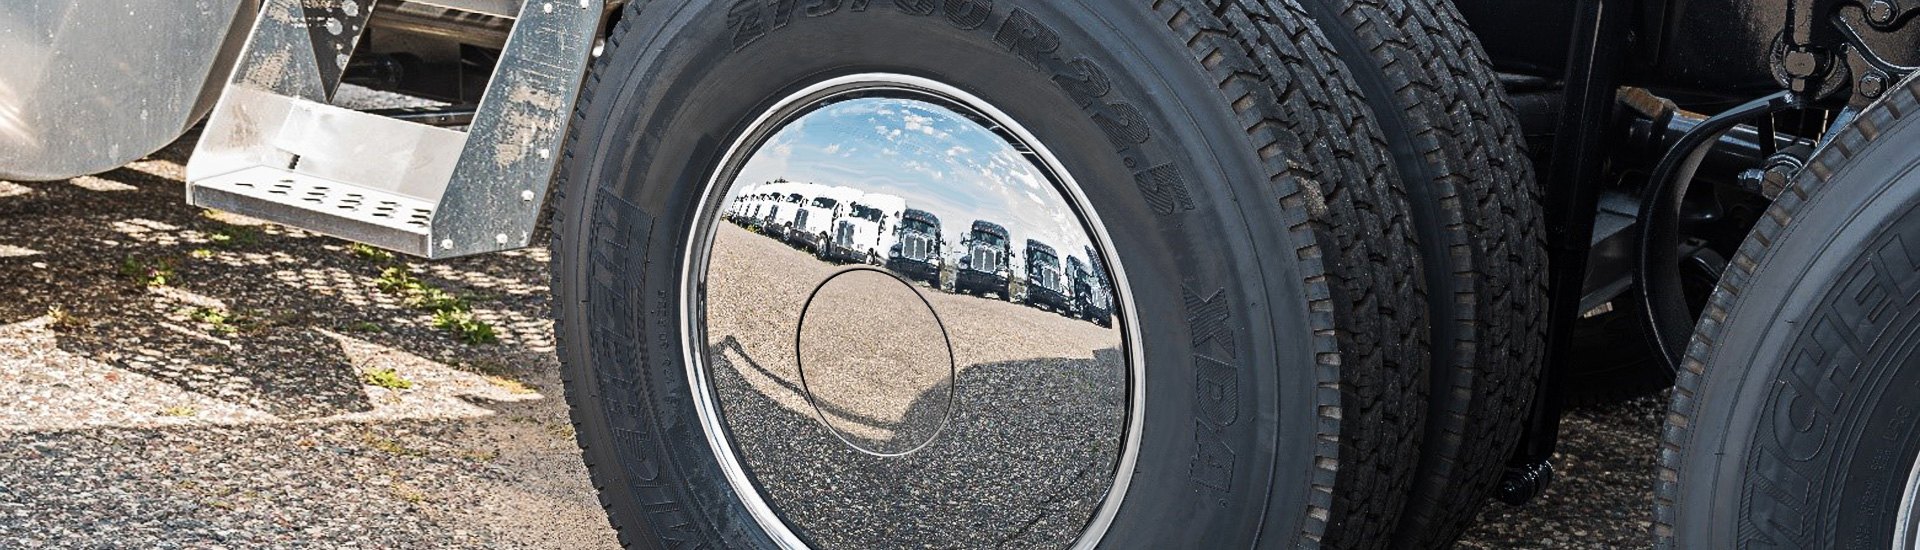 truck wheel covers hubcaps